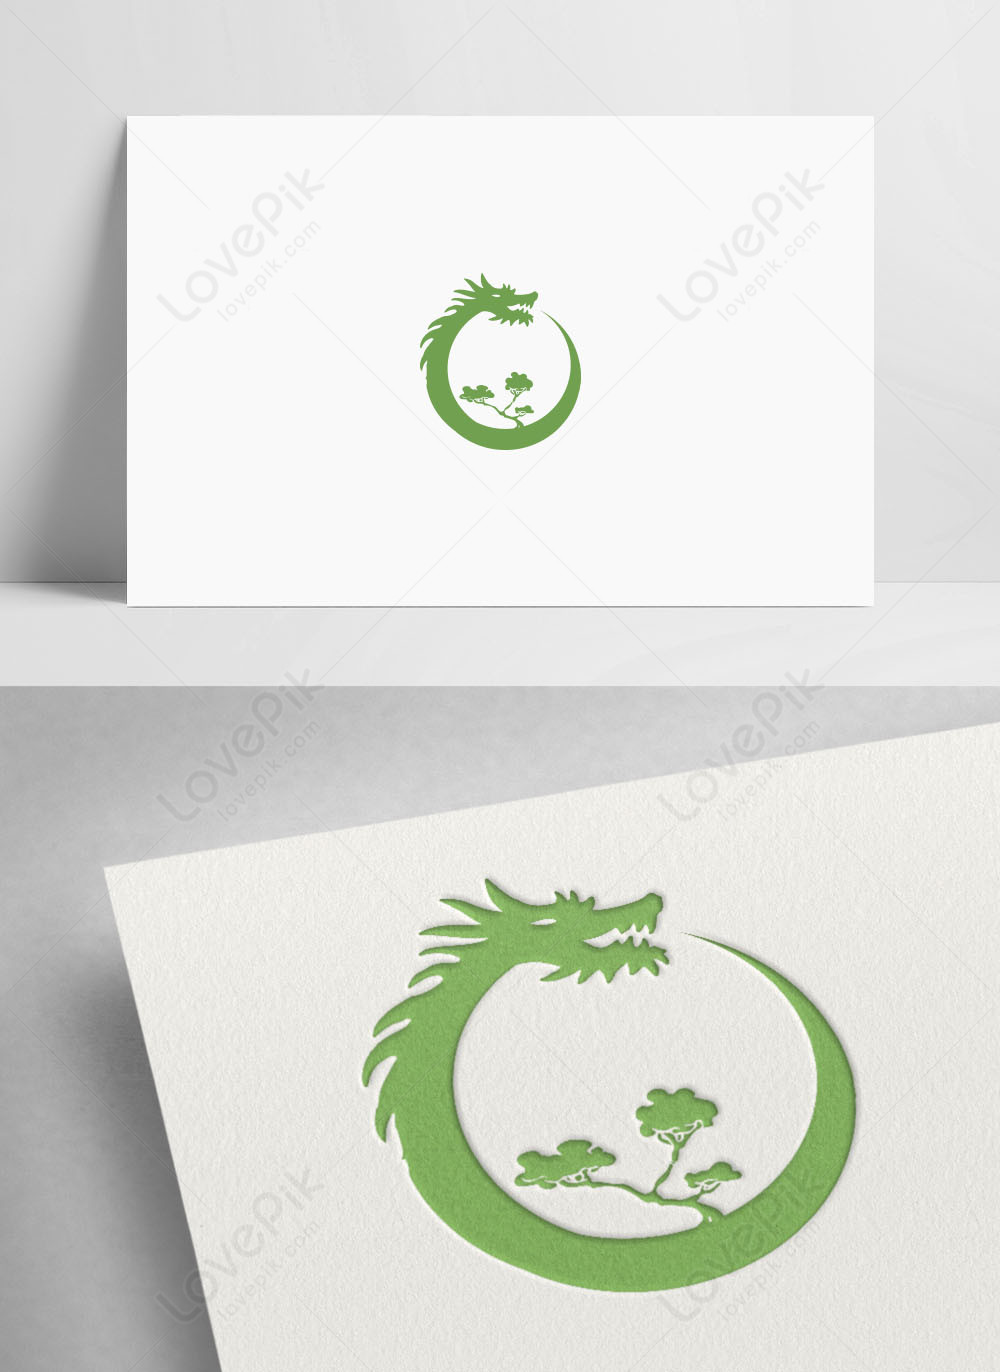 Dragon logo design Template | PosterMyWall